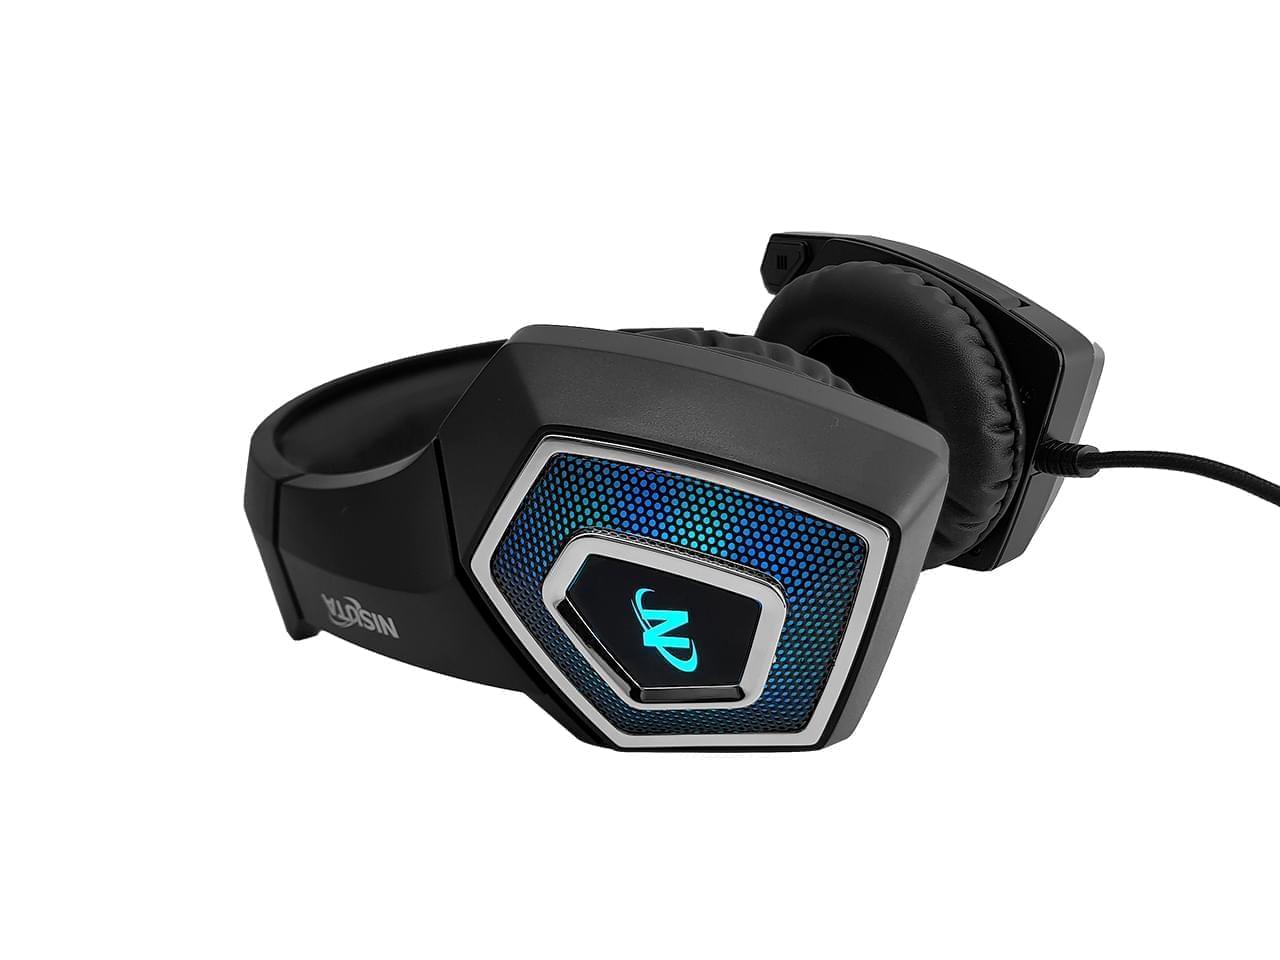 Auricular Nisuta Gaming Bluetooth/Cable con Led y micrófono